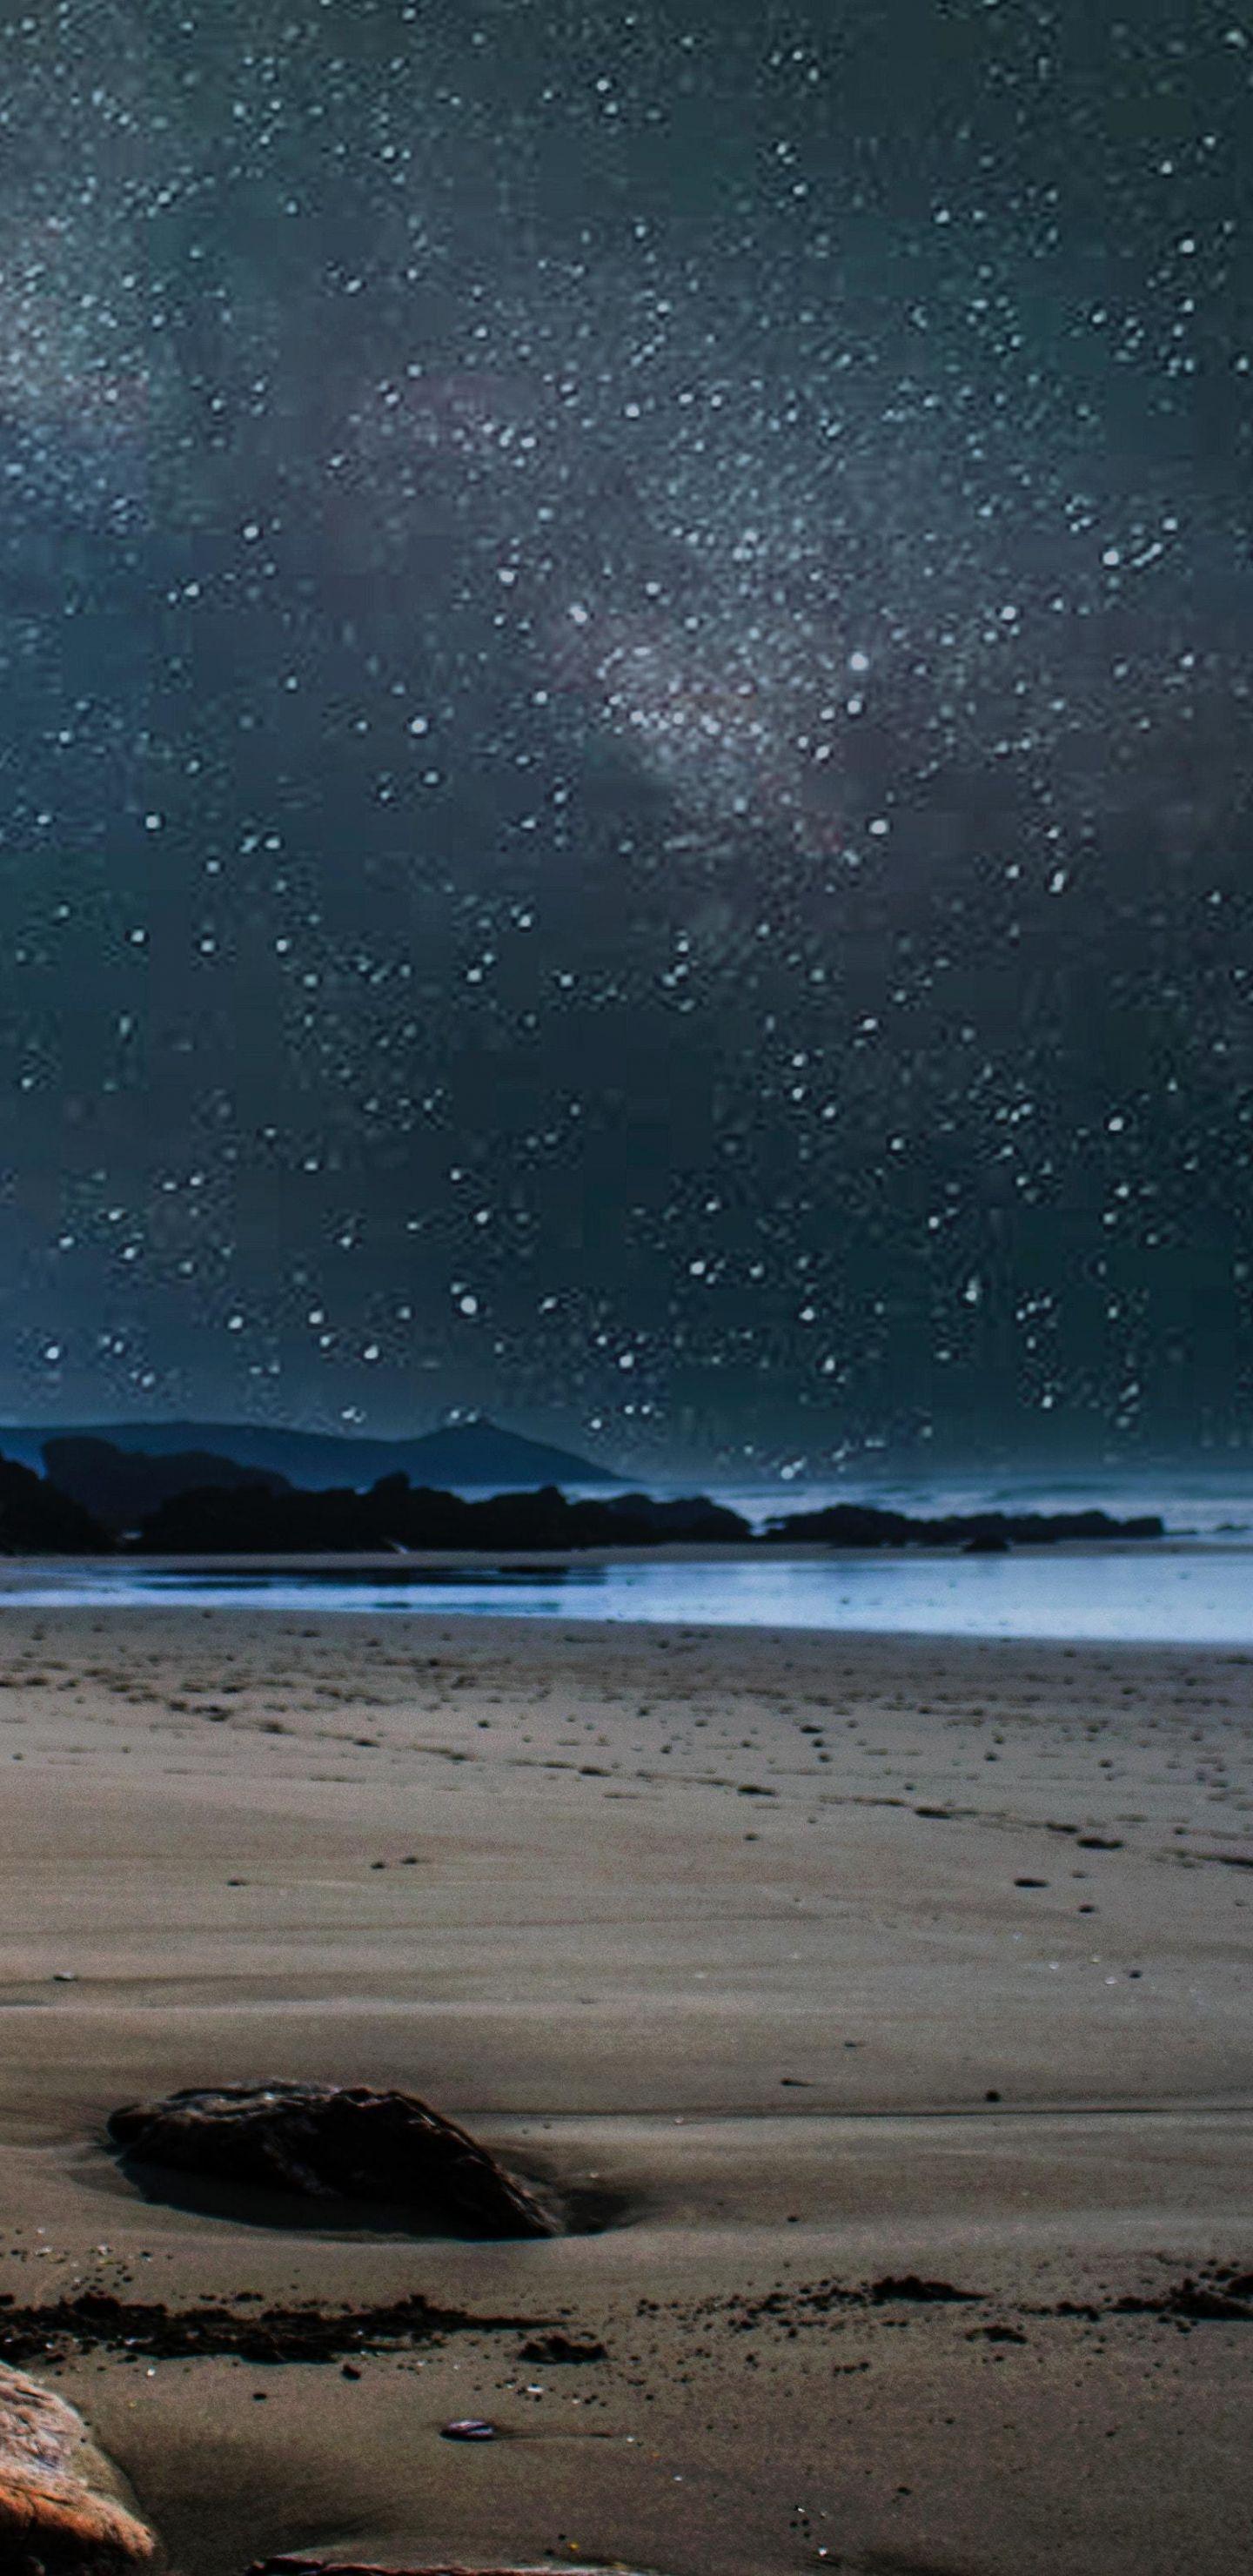 Galaxy Beach Wallpapers - Top Free Galaxy Beach Backgrounds